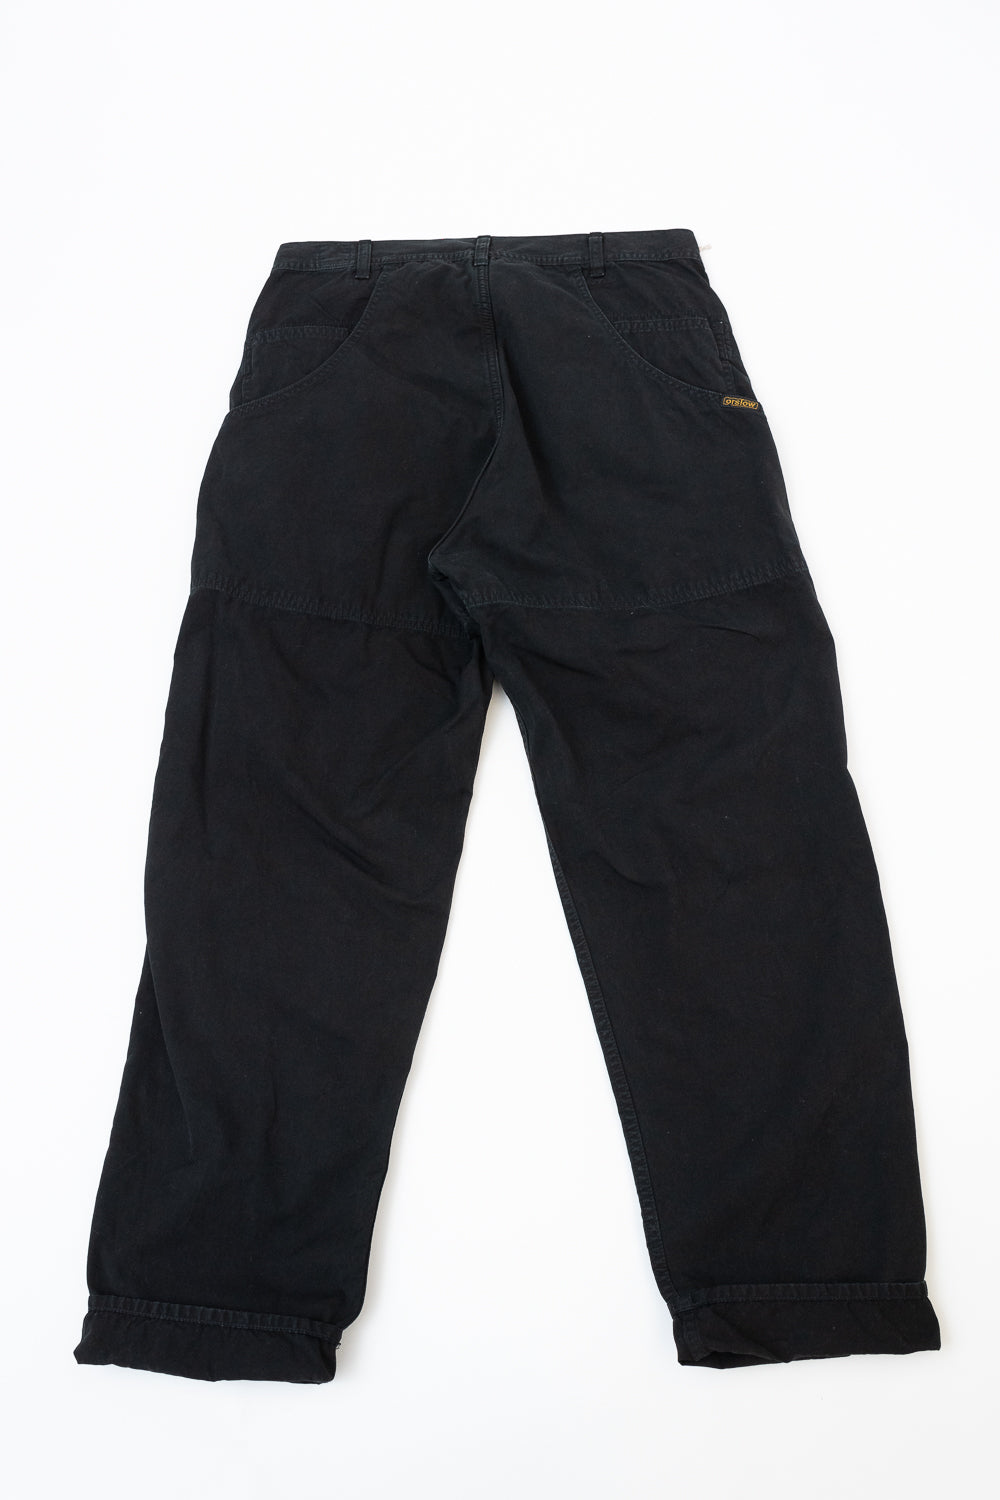 01-5129-61 - Double Knee Utility Work Pants - Black